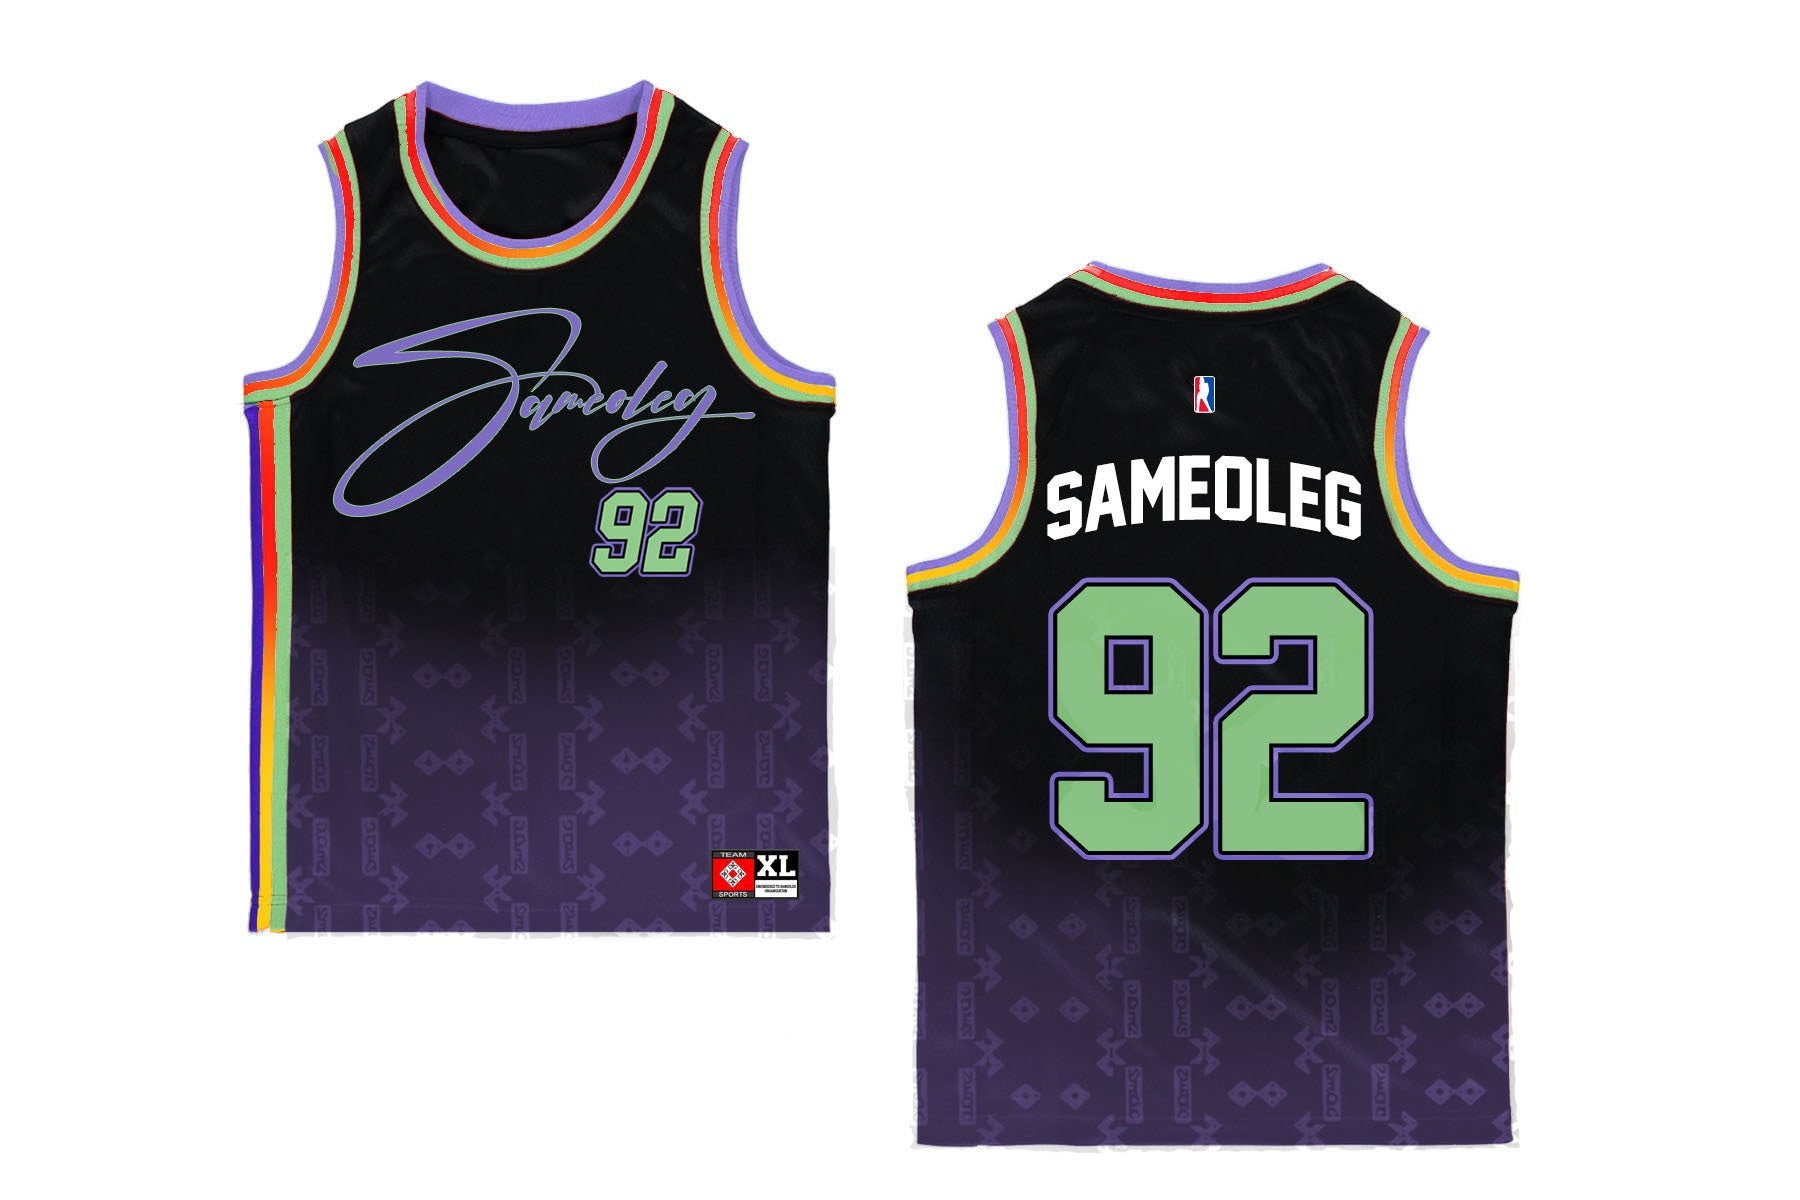 SameoleG Classic Basketball Jersey (Not Yet Available)